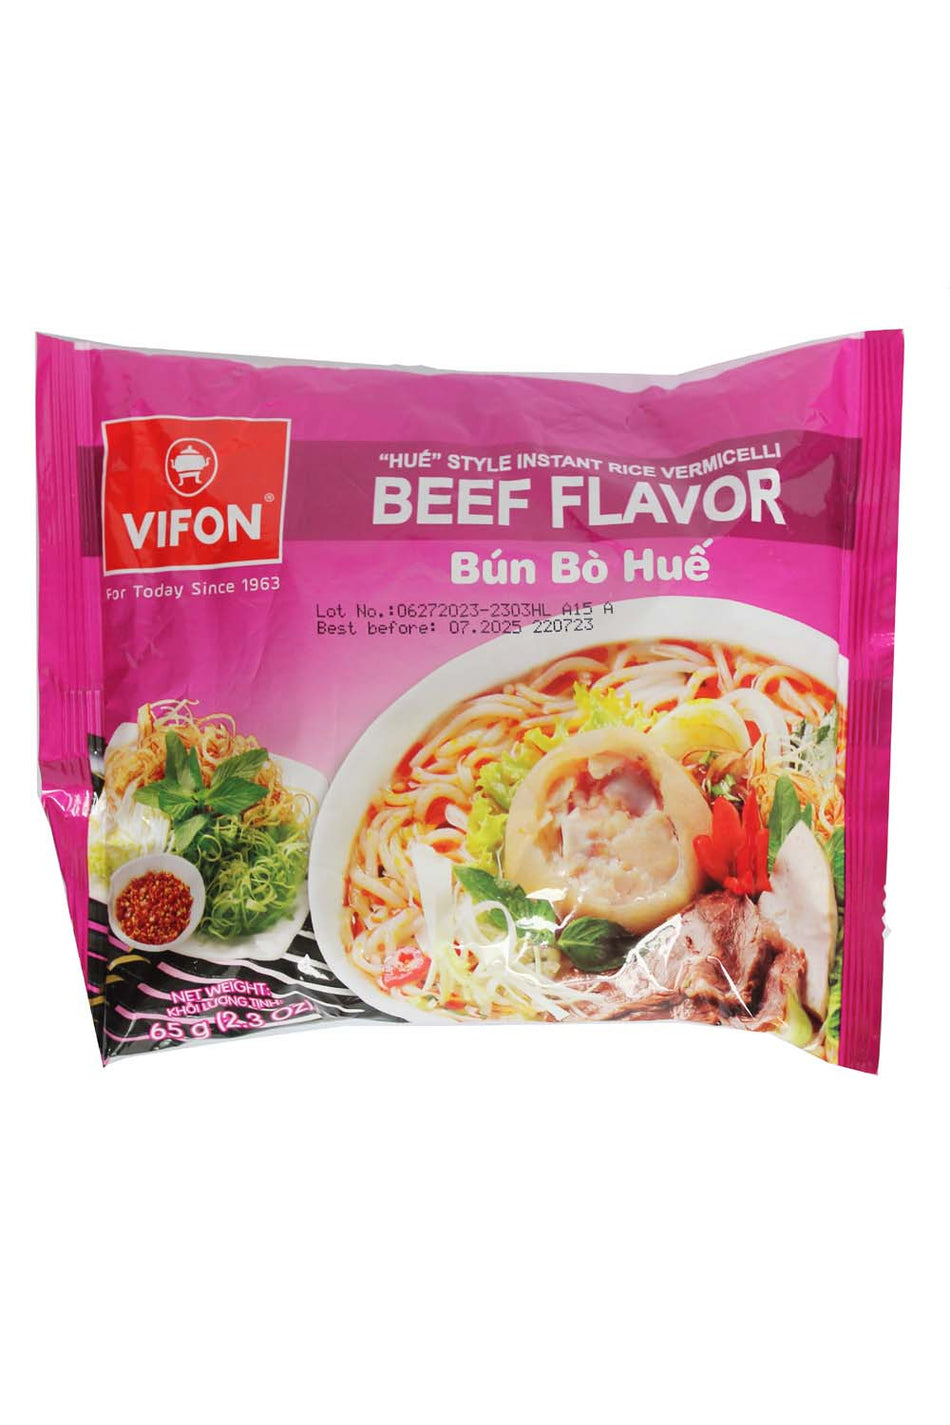 ViFON Beef Flavor instant Noodles